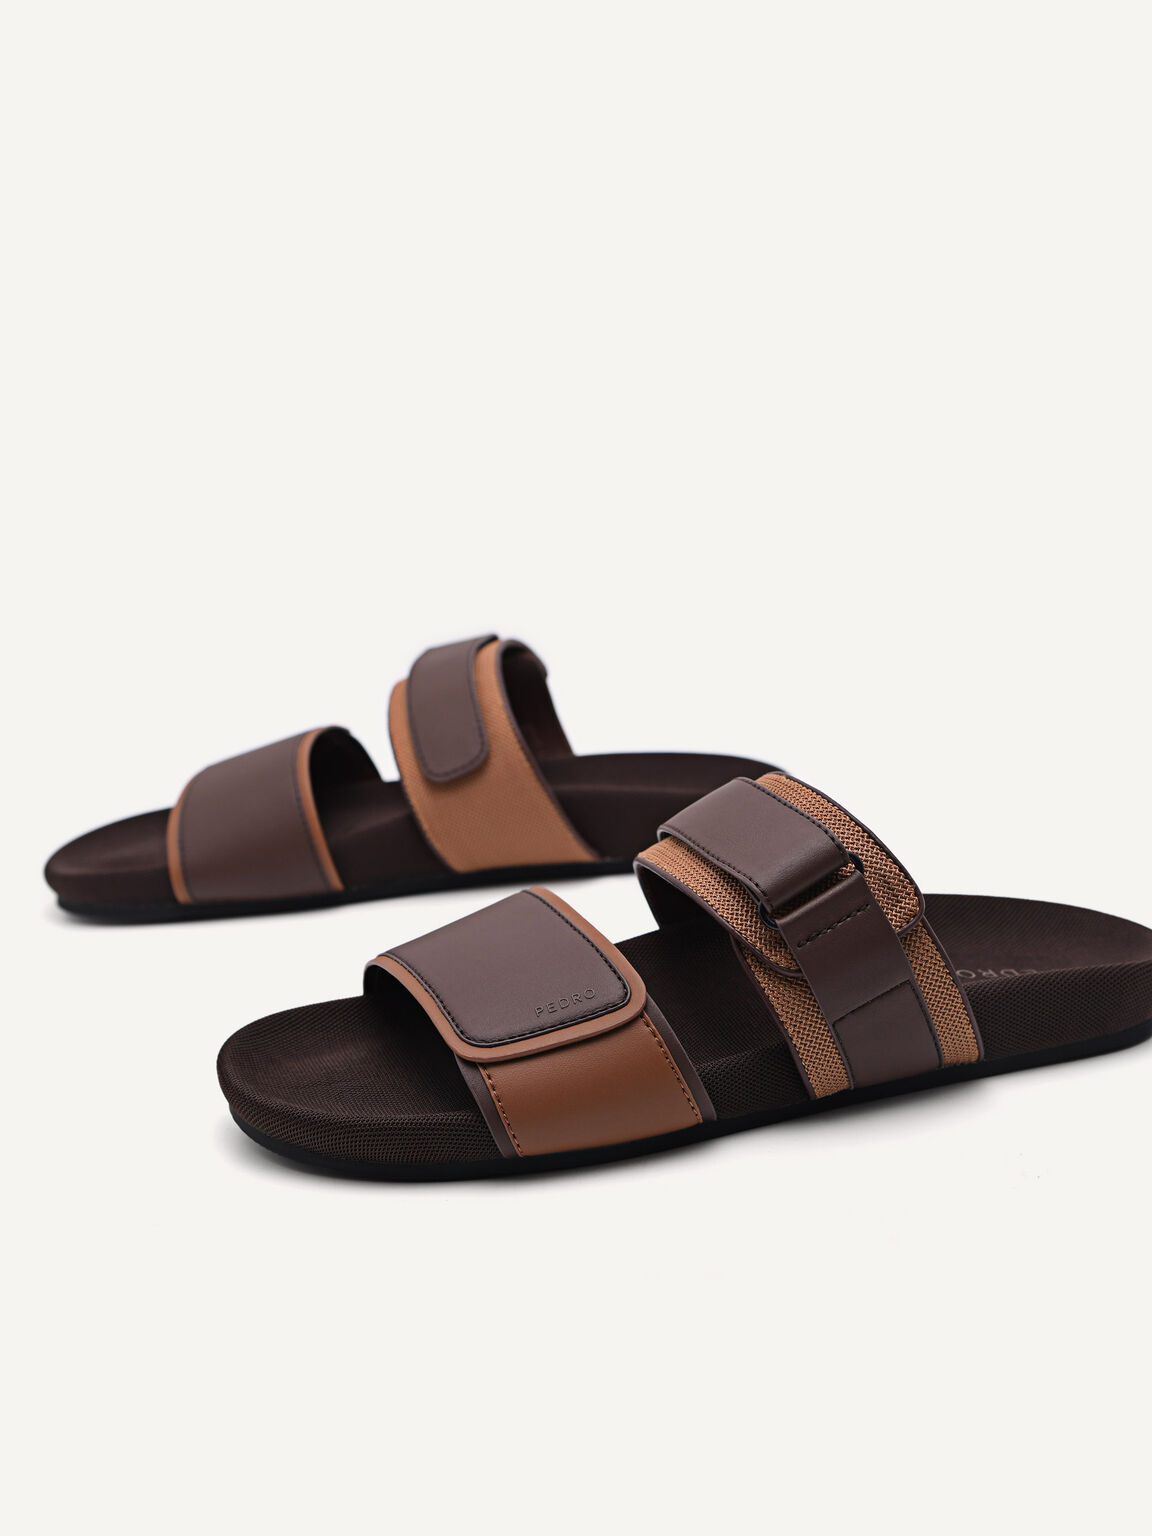 Double Strap Slide Sandals, Dark Brown, hi-res